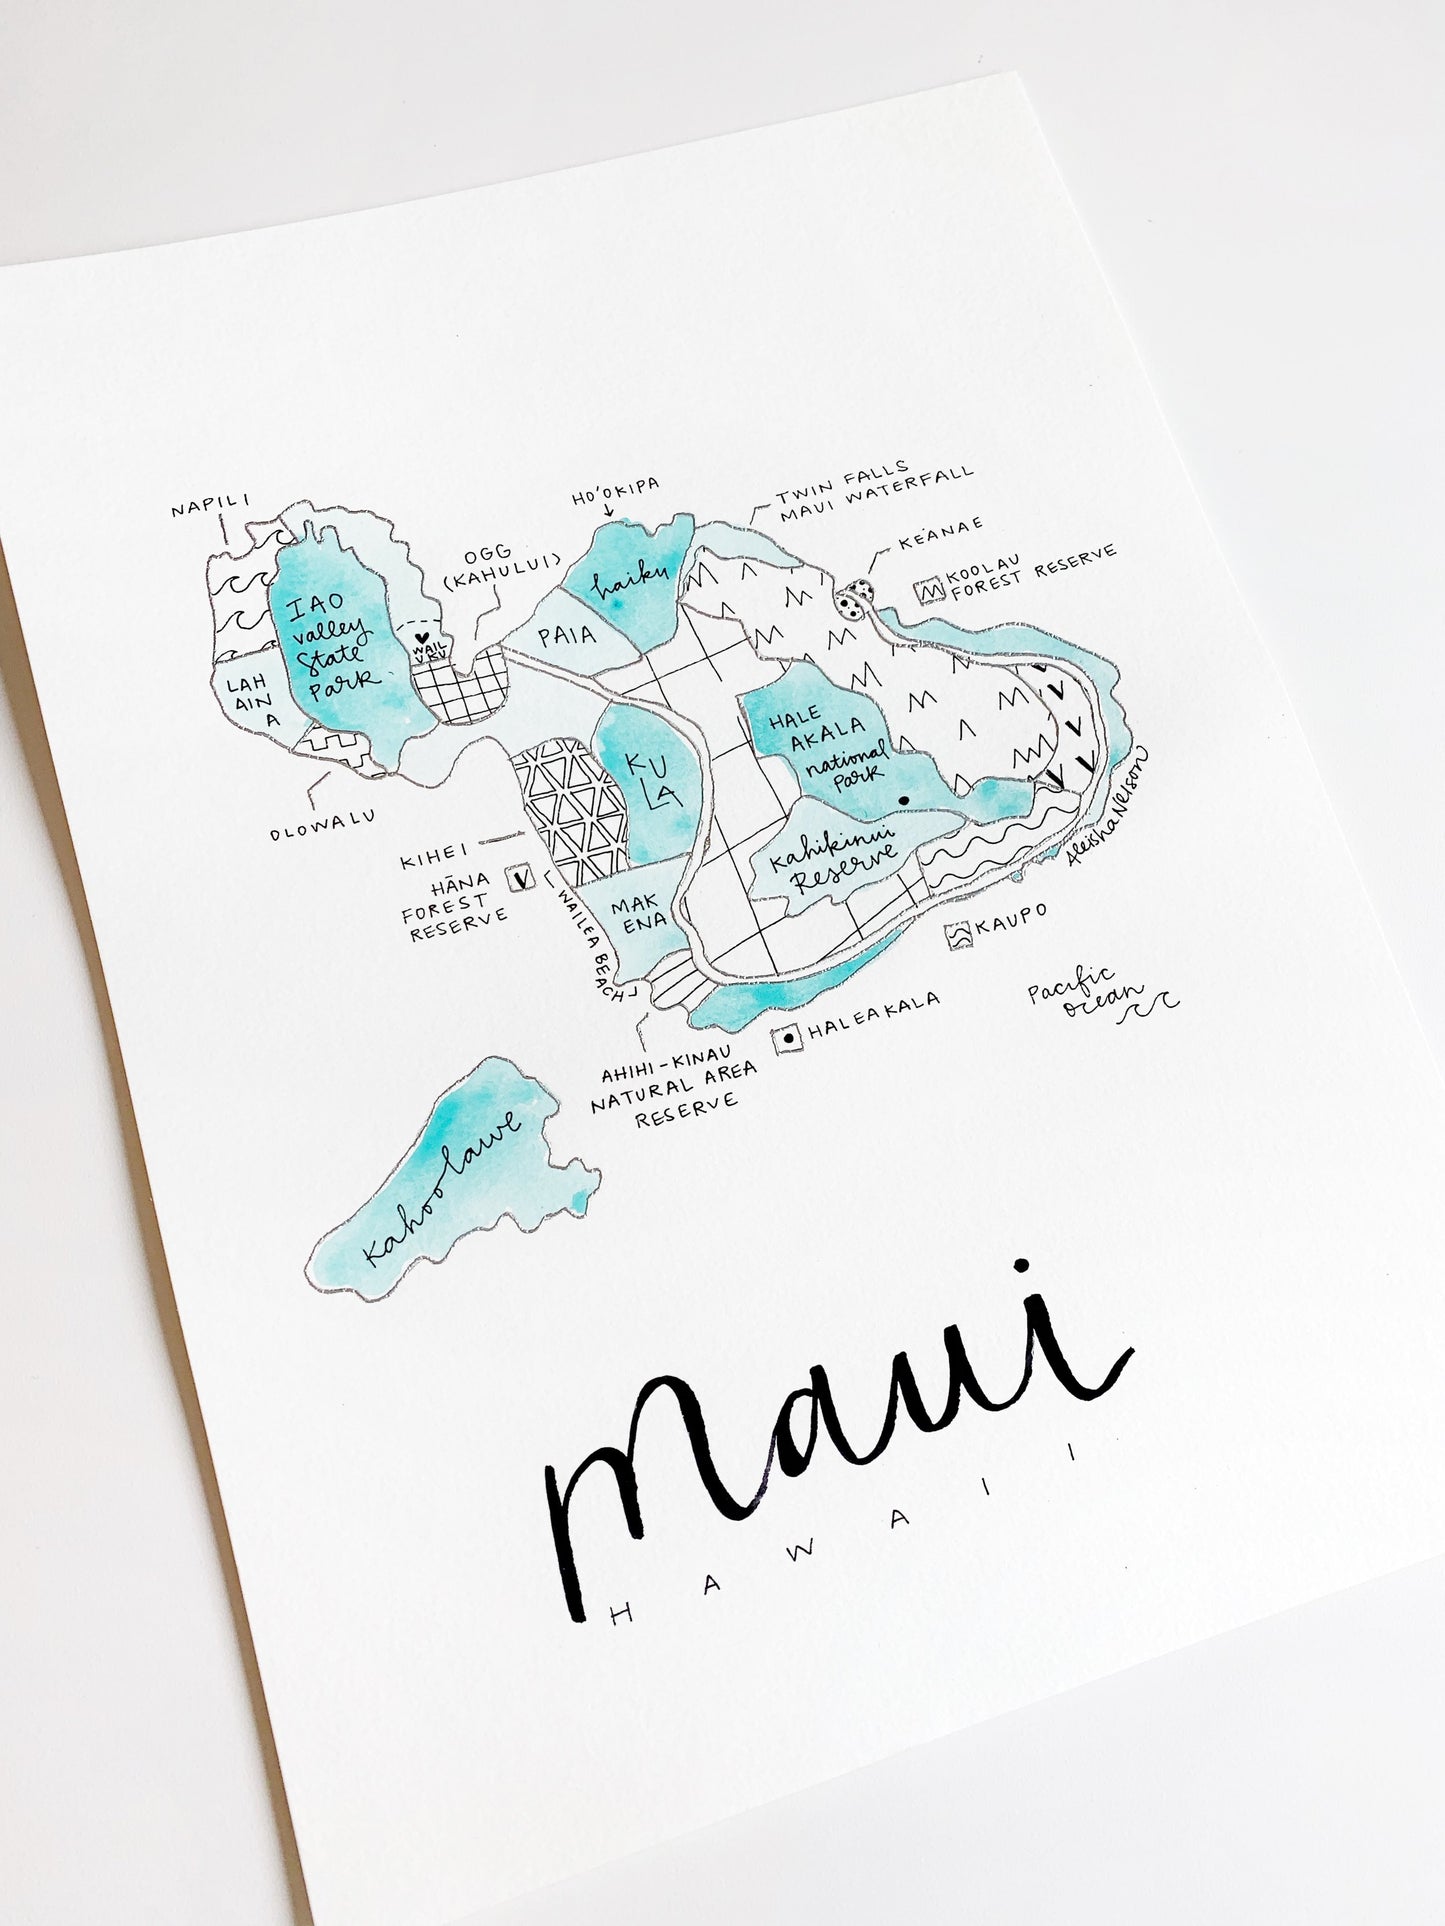 Hand Painted Maui Map